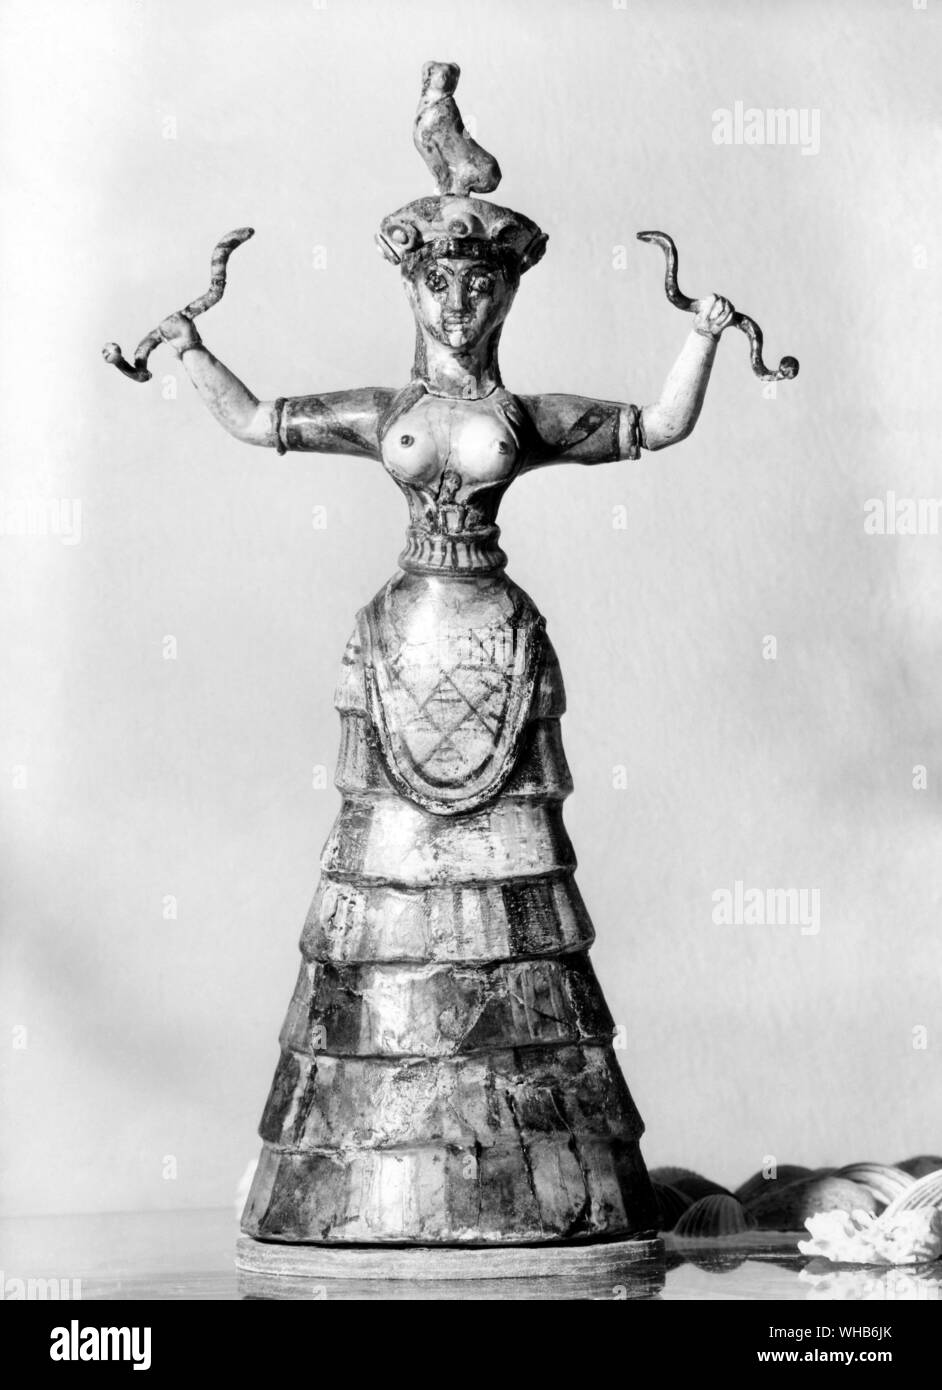 Snake-priestess, or a snake-goddess, from Palace of Minos at Knossos - Crete. Minoan Snake Goddess figurine c 1600 BCE. Stock Photo